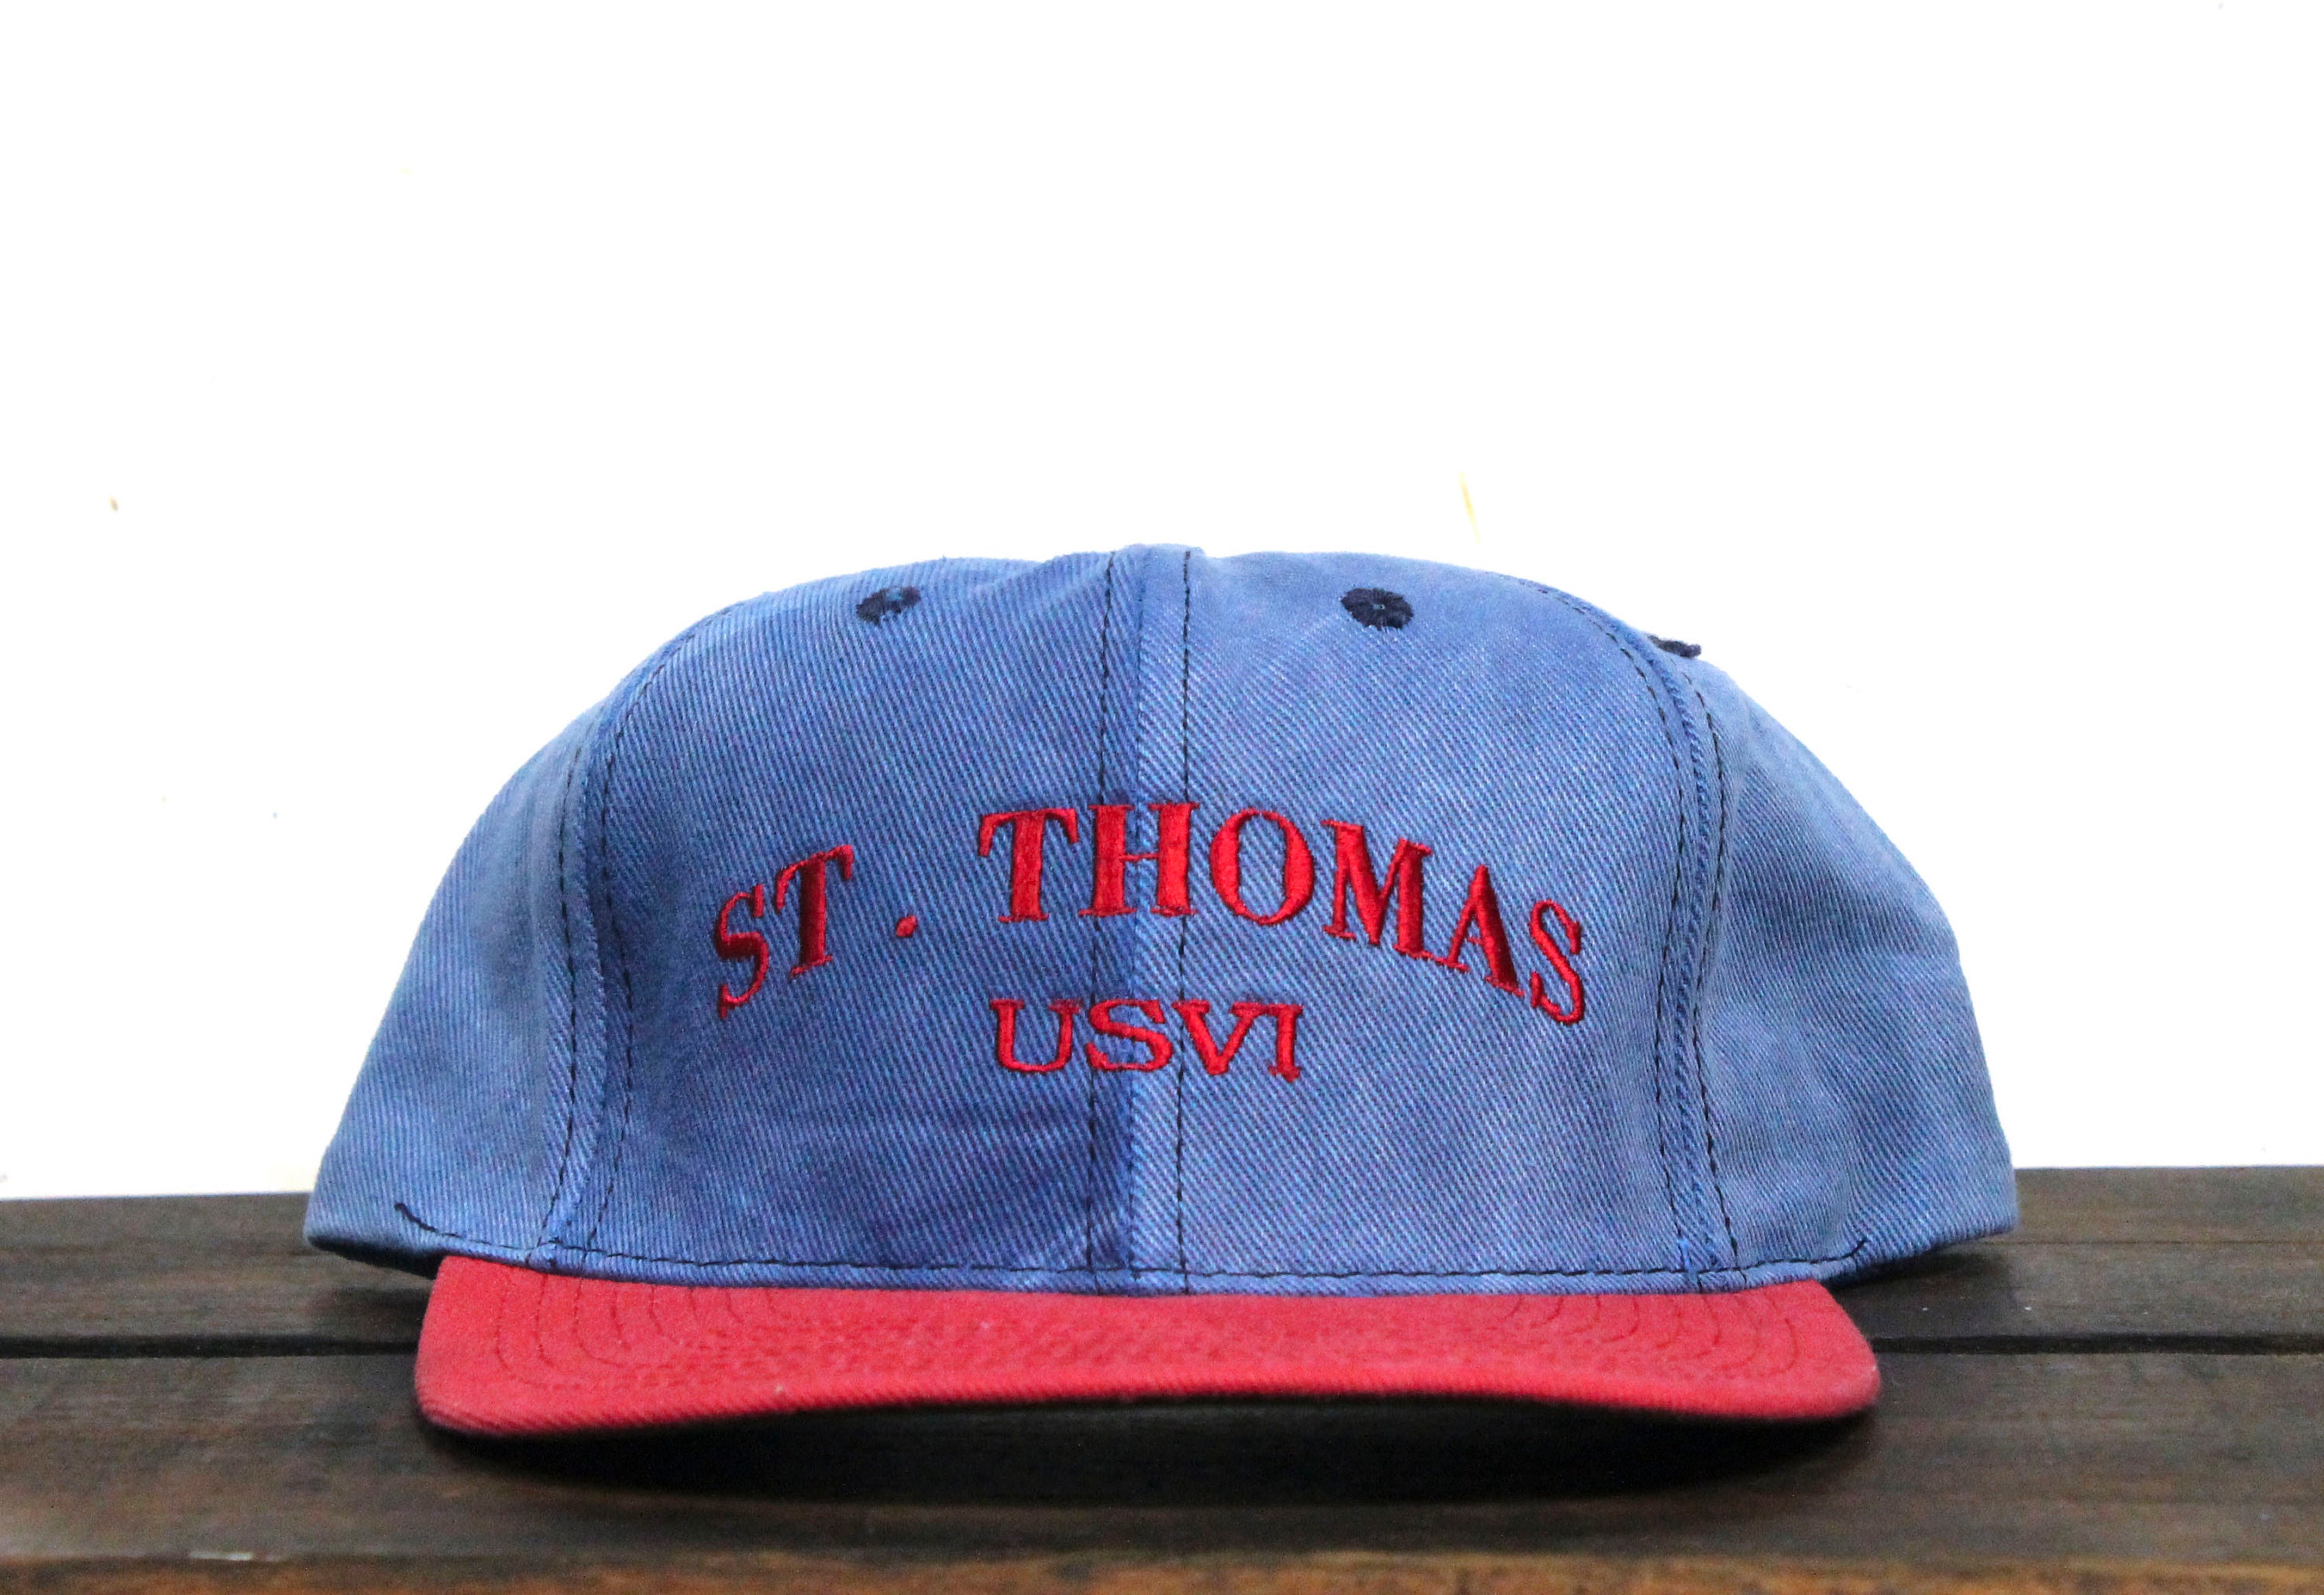 DALLAS STARS Vintage 90s Distressed Snapback Hat Logo 7 